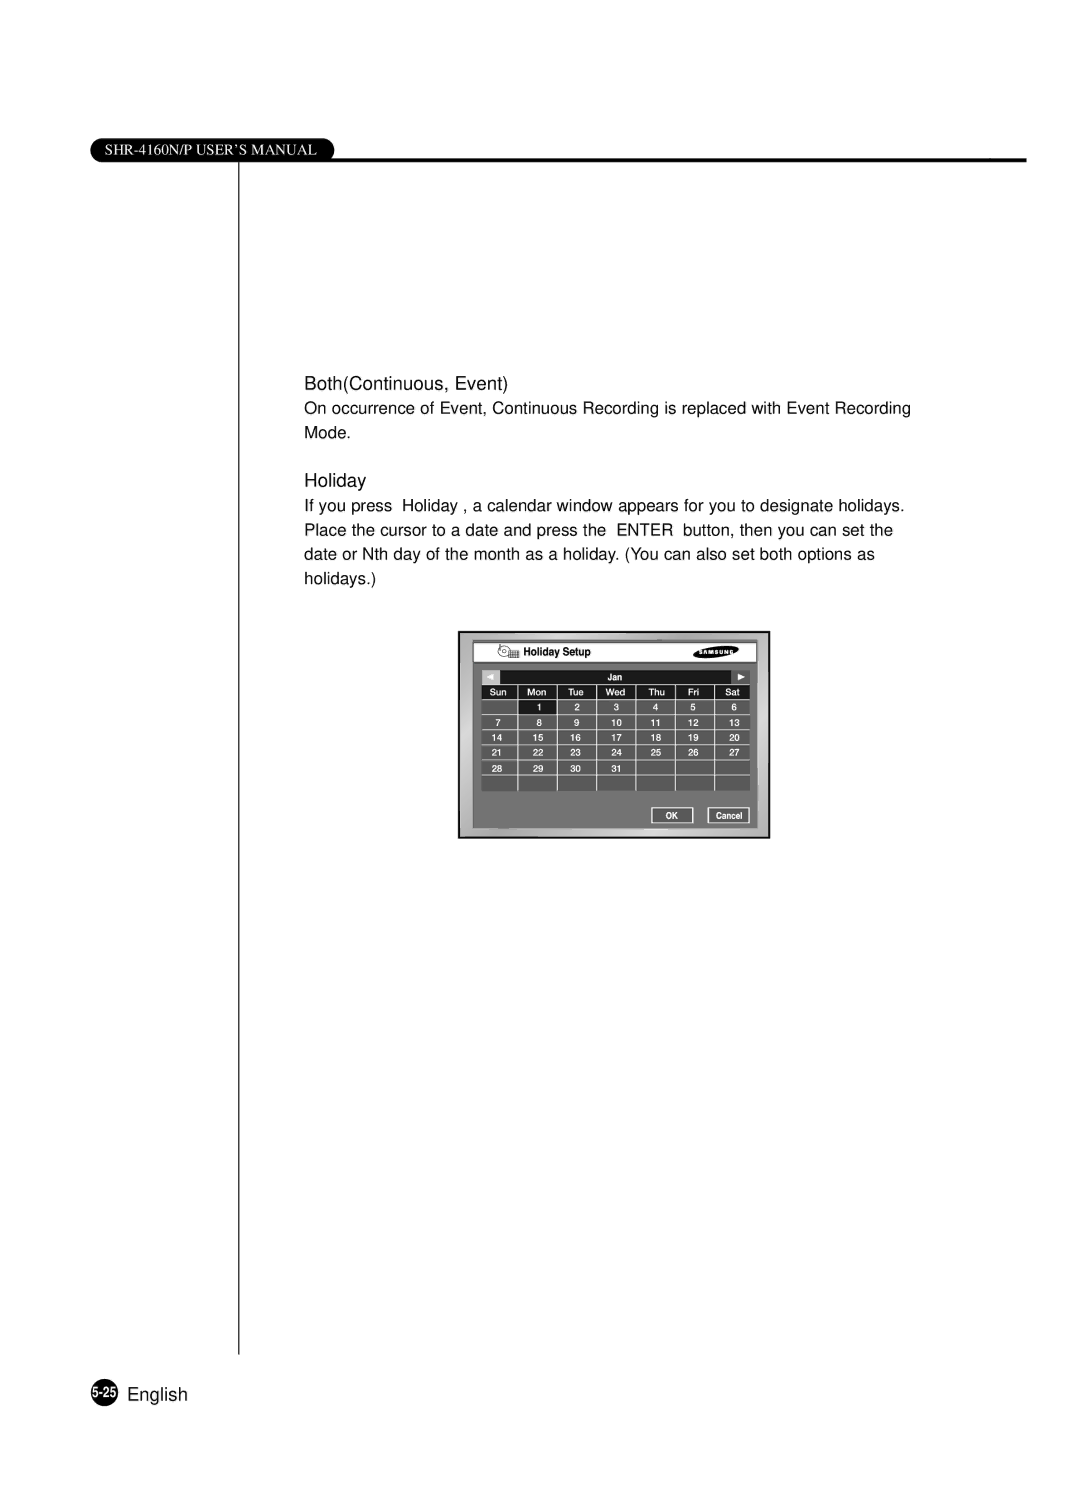 Samsung SHR-4160P manual BothContinuous, Event, Holiday, 25English 